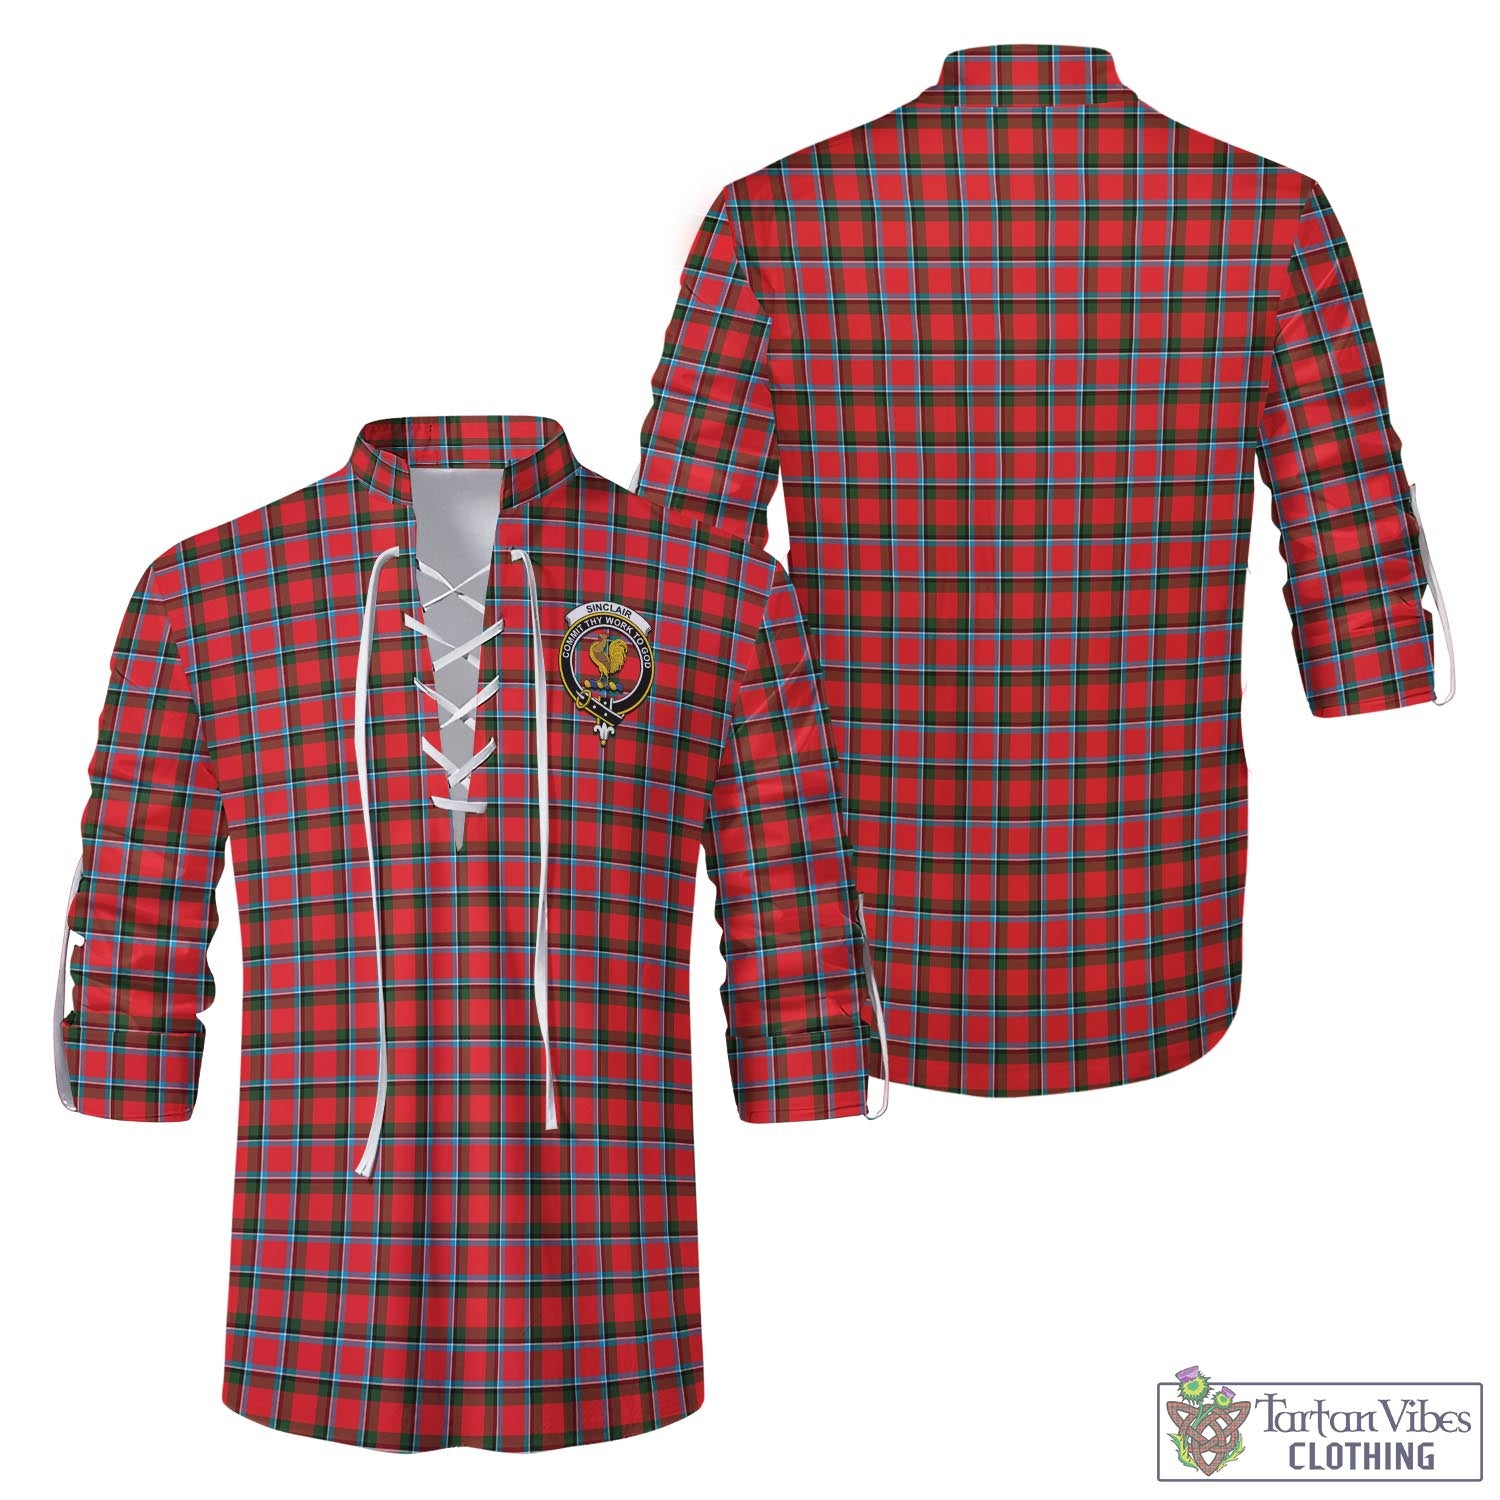 Tartan Vibes Clothing Sinclair Modern Tartan Men's Scottish Traditional Jacobite Ghillie Kilt Shirt with Family Crest